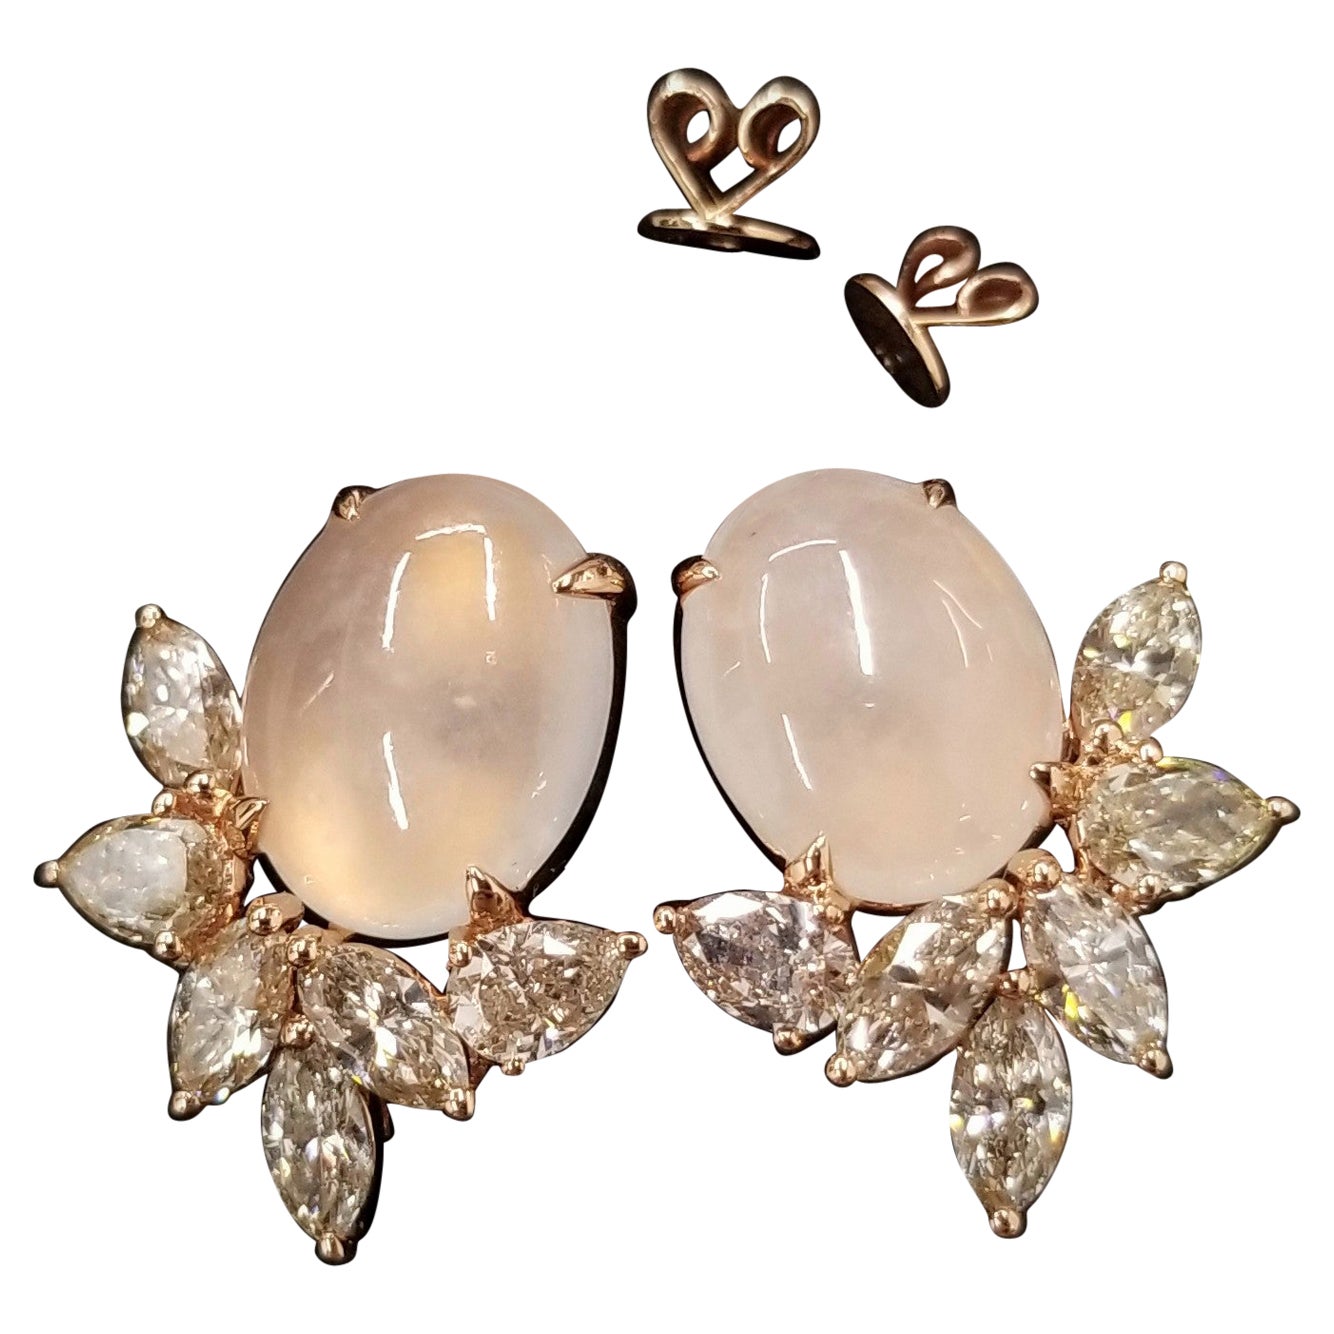 Certified 2.12 Carat Diamond & White Jade (Fei Cui) Earrings in 18K Rose Gold For Sale